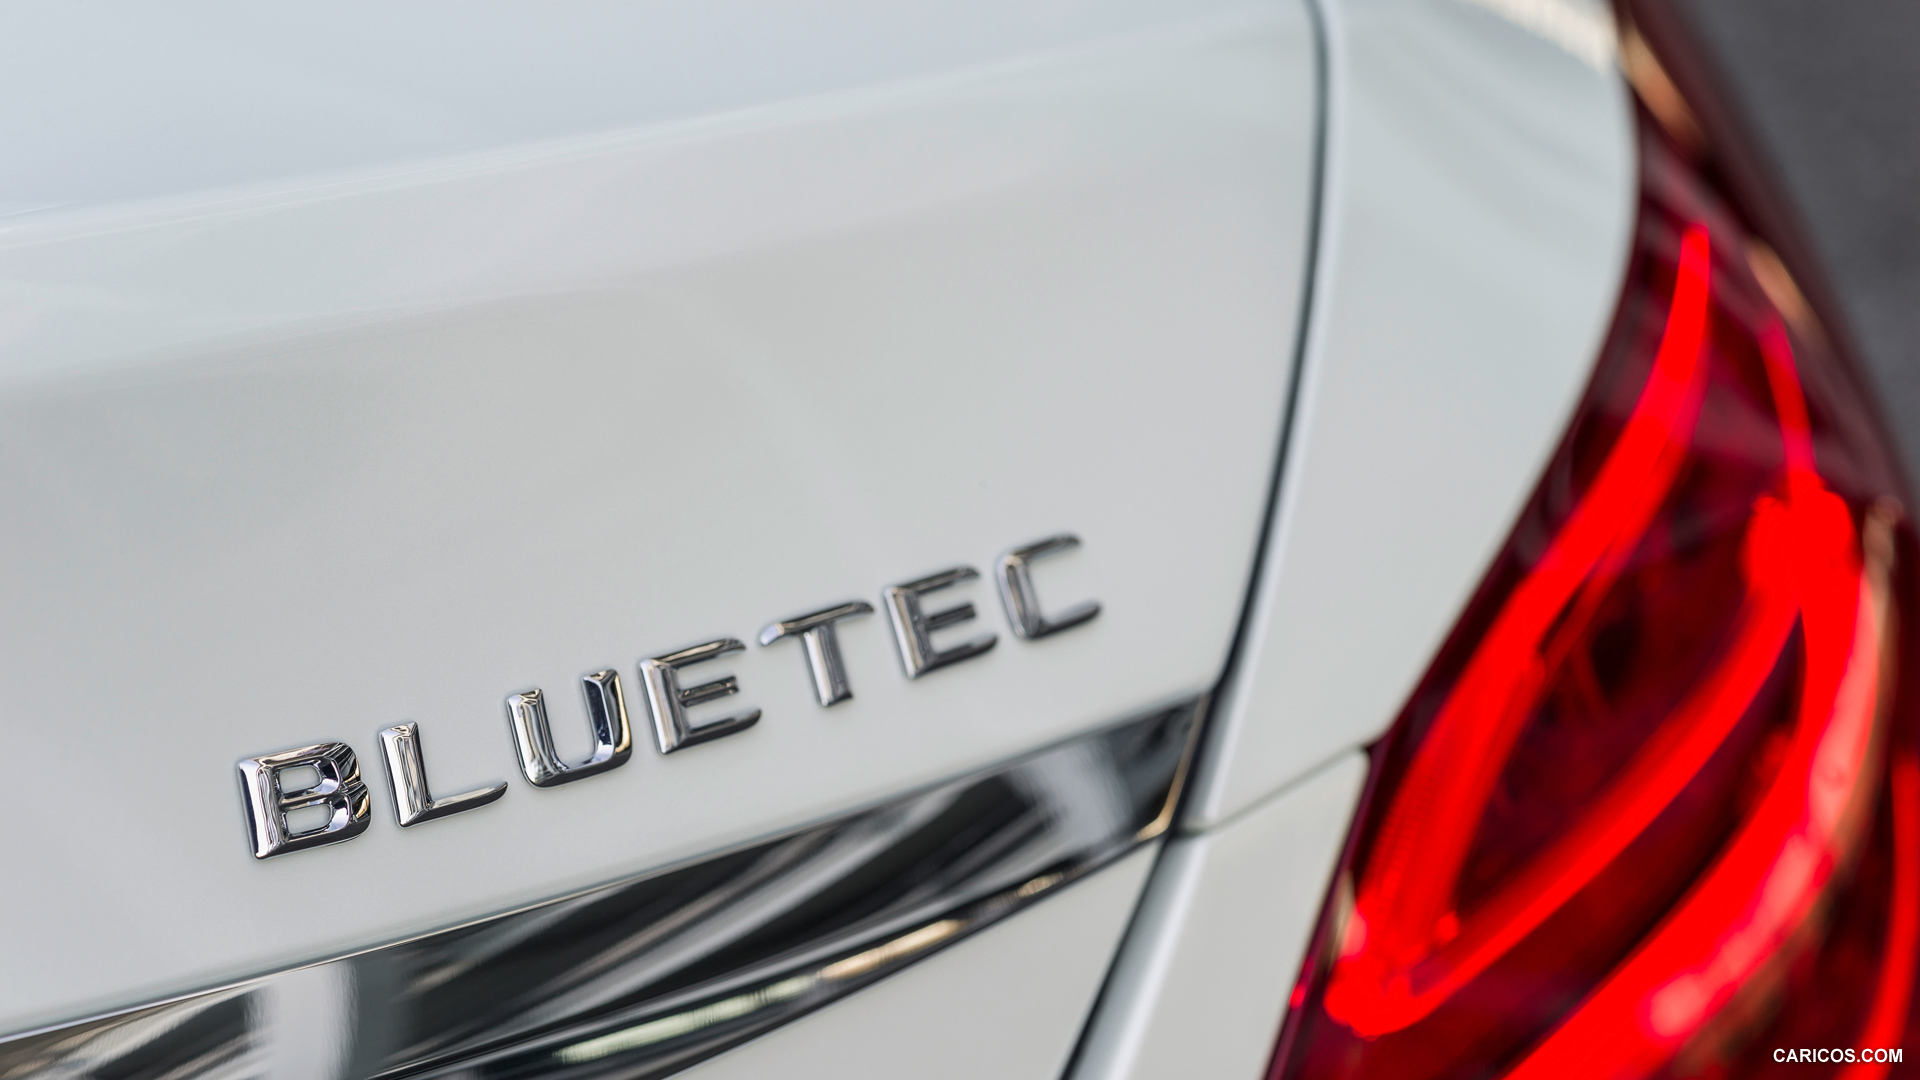 2015 Mercedes-Benz C-Class C250 BlueTEC (Avantgarde) - Badge, #178 of 181